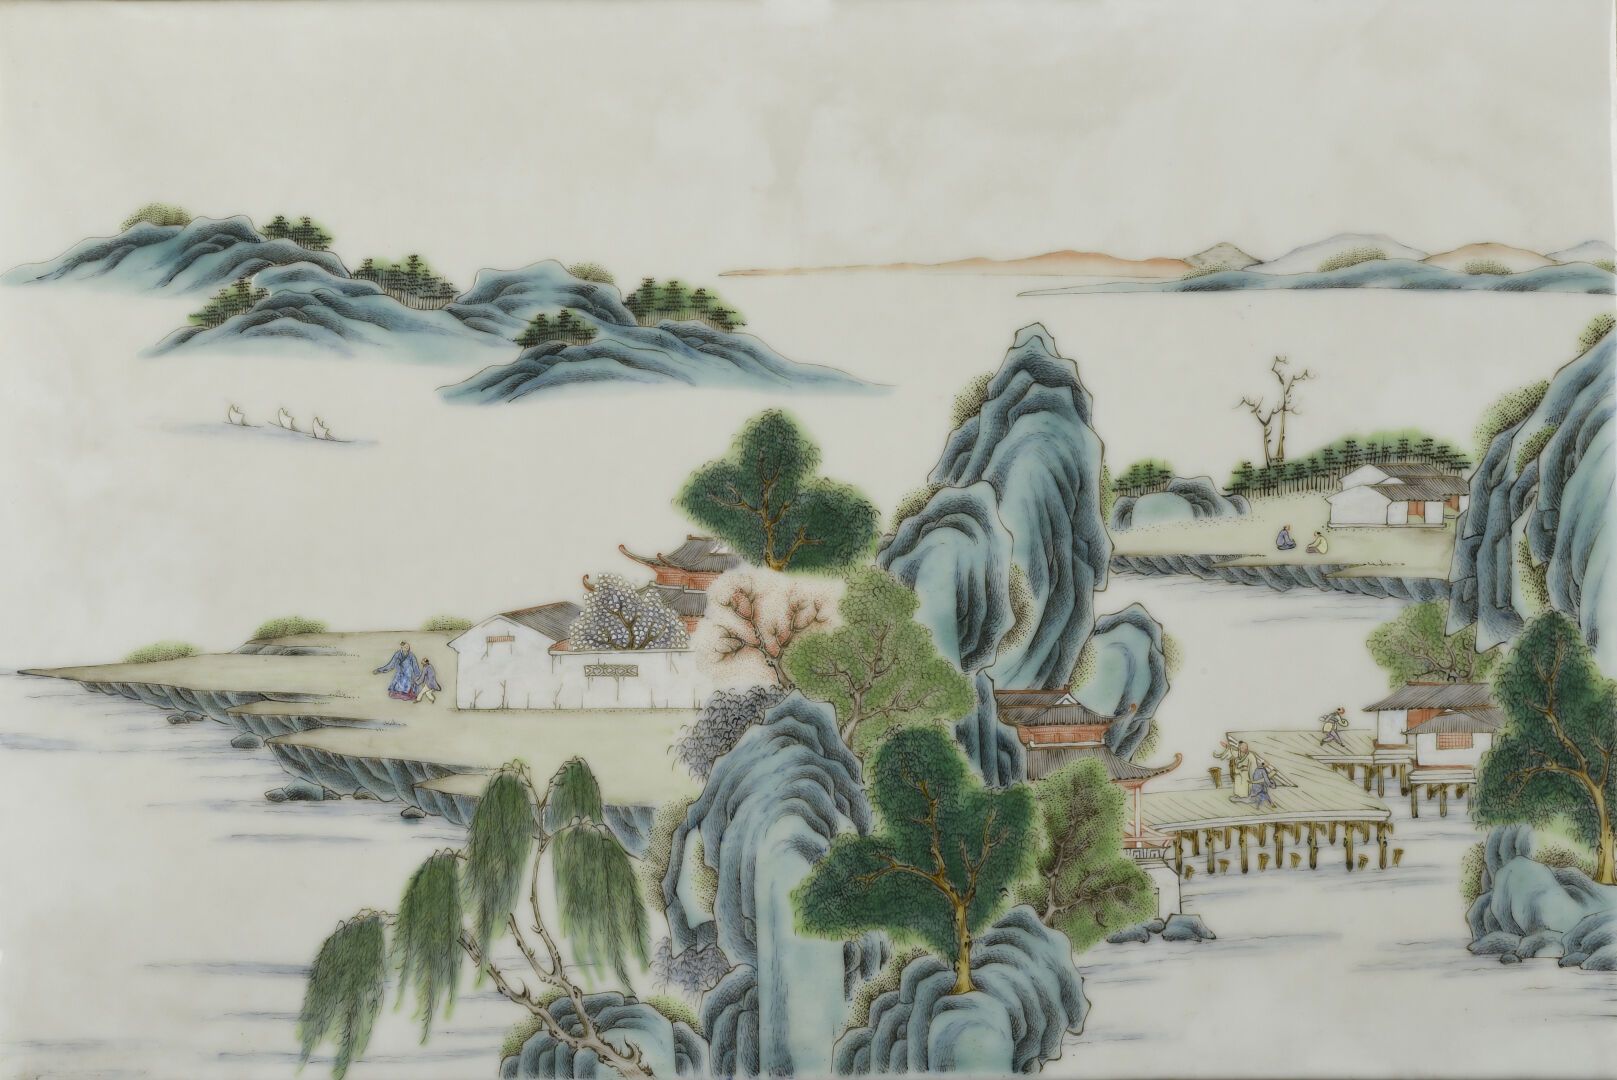 Null 四件法米莱瓷盘
中国，19世纪
长方形，代表四季，装饰有湖泊和山地风景中的人物和房屋。
26 x 39厘米